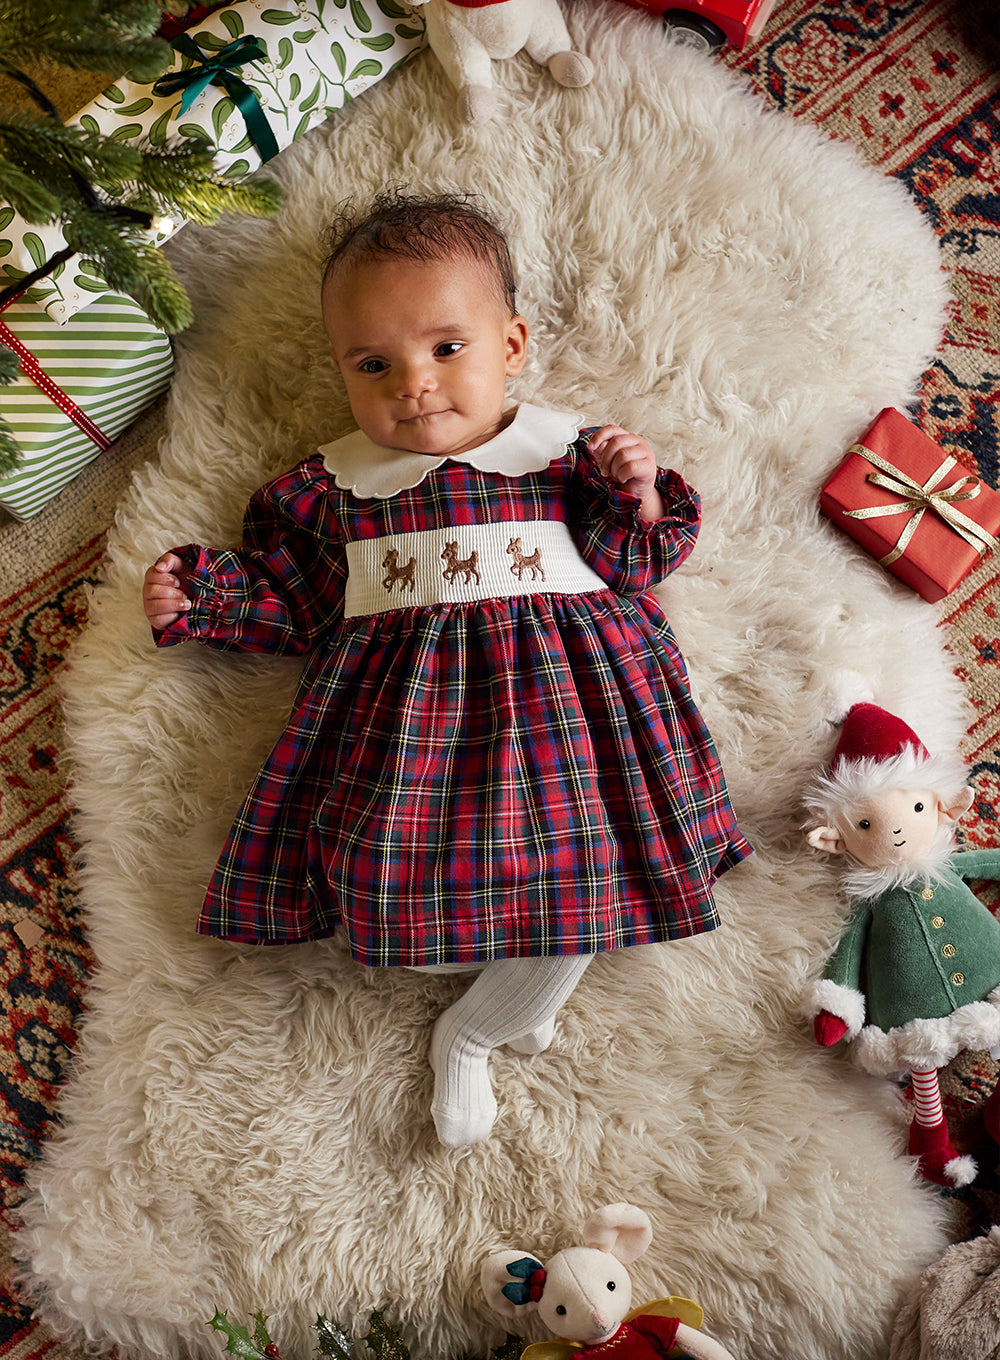 infant christmas dress